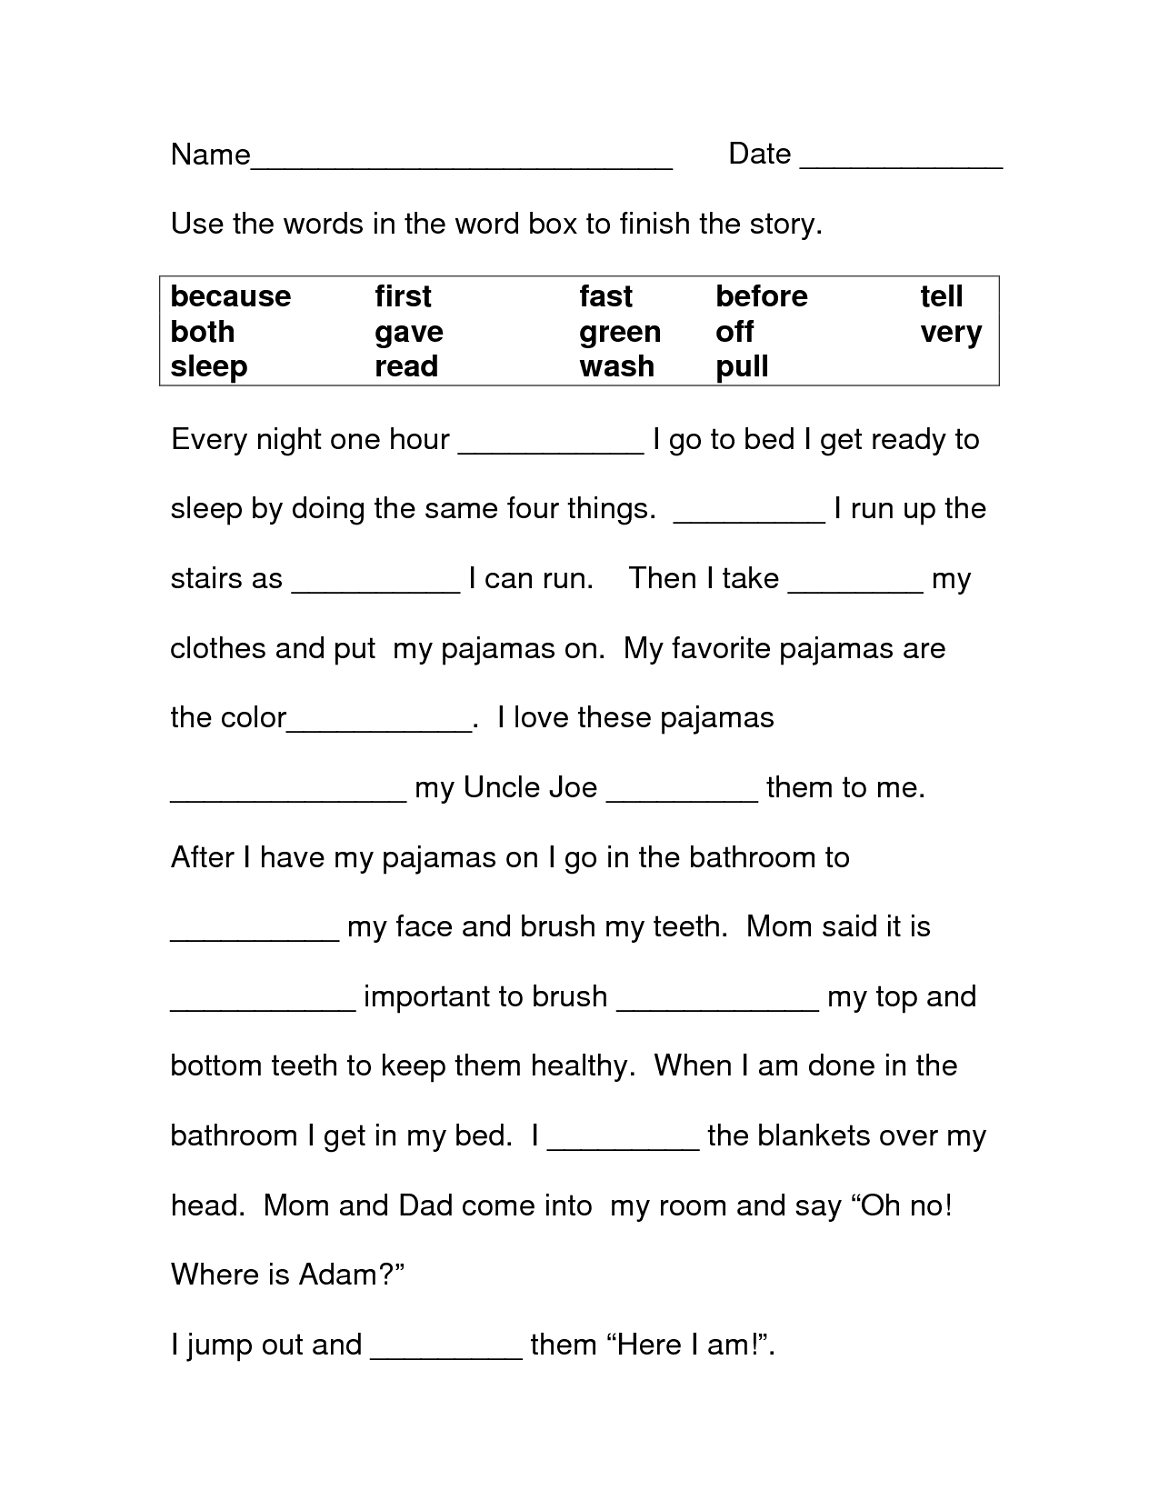 Free Printable Literacy Worksheets | Activity Shelter - Free Printable Literacy Worksheets For Adults